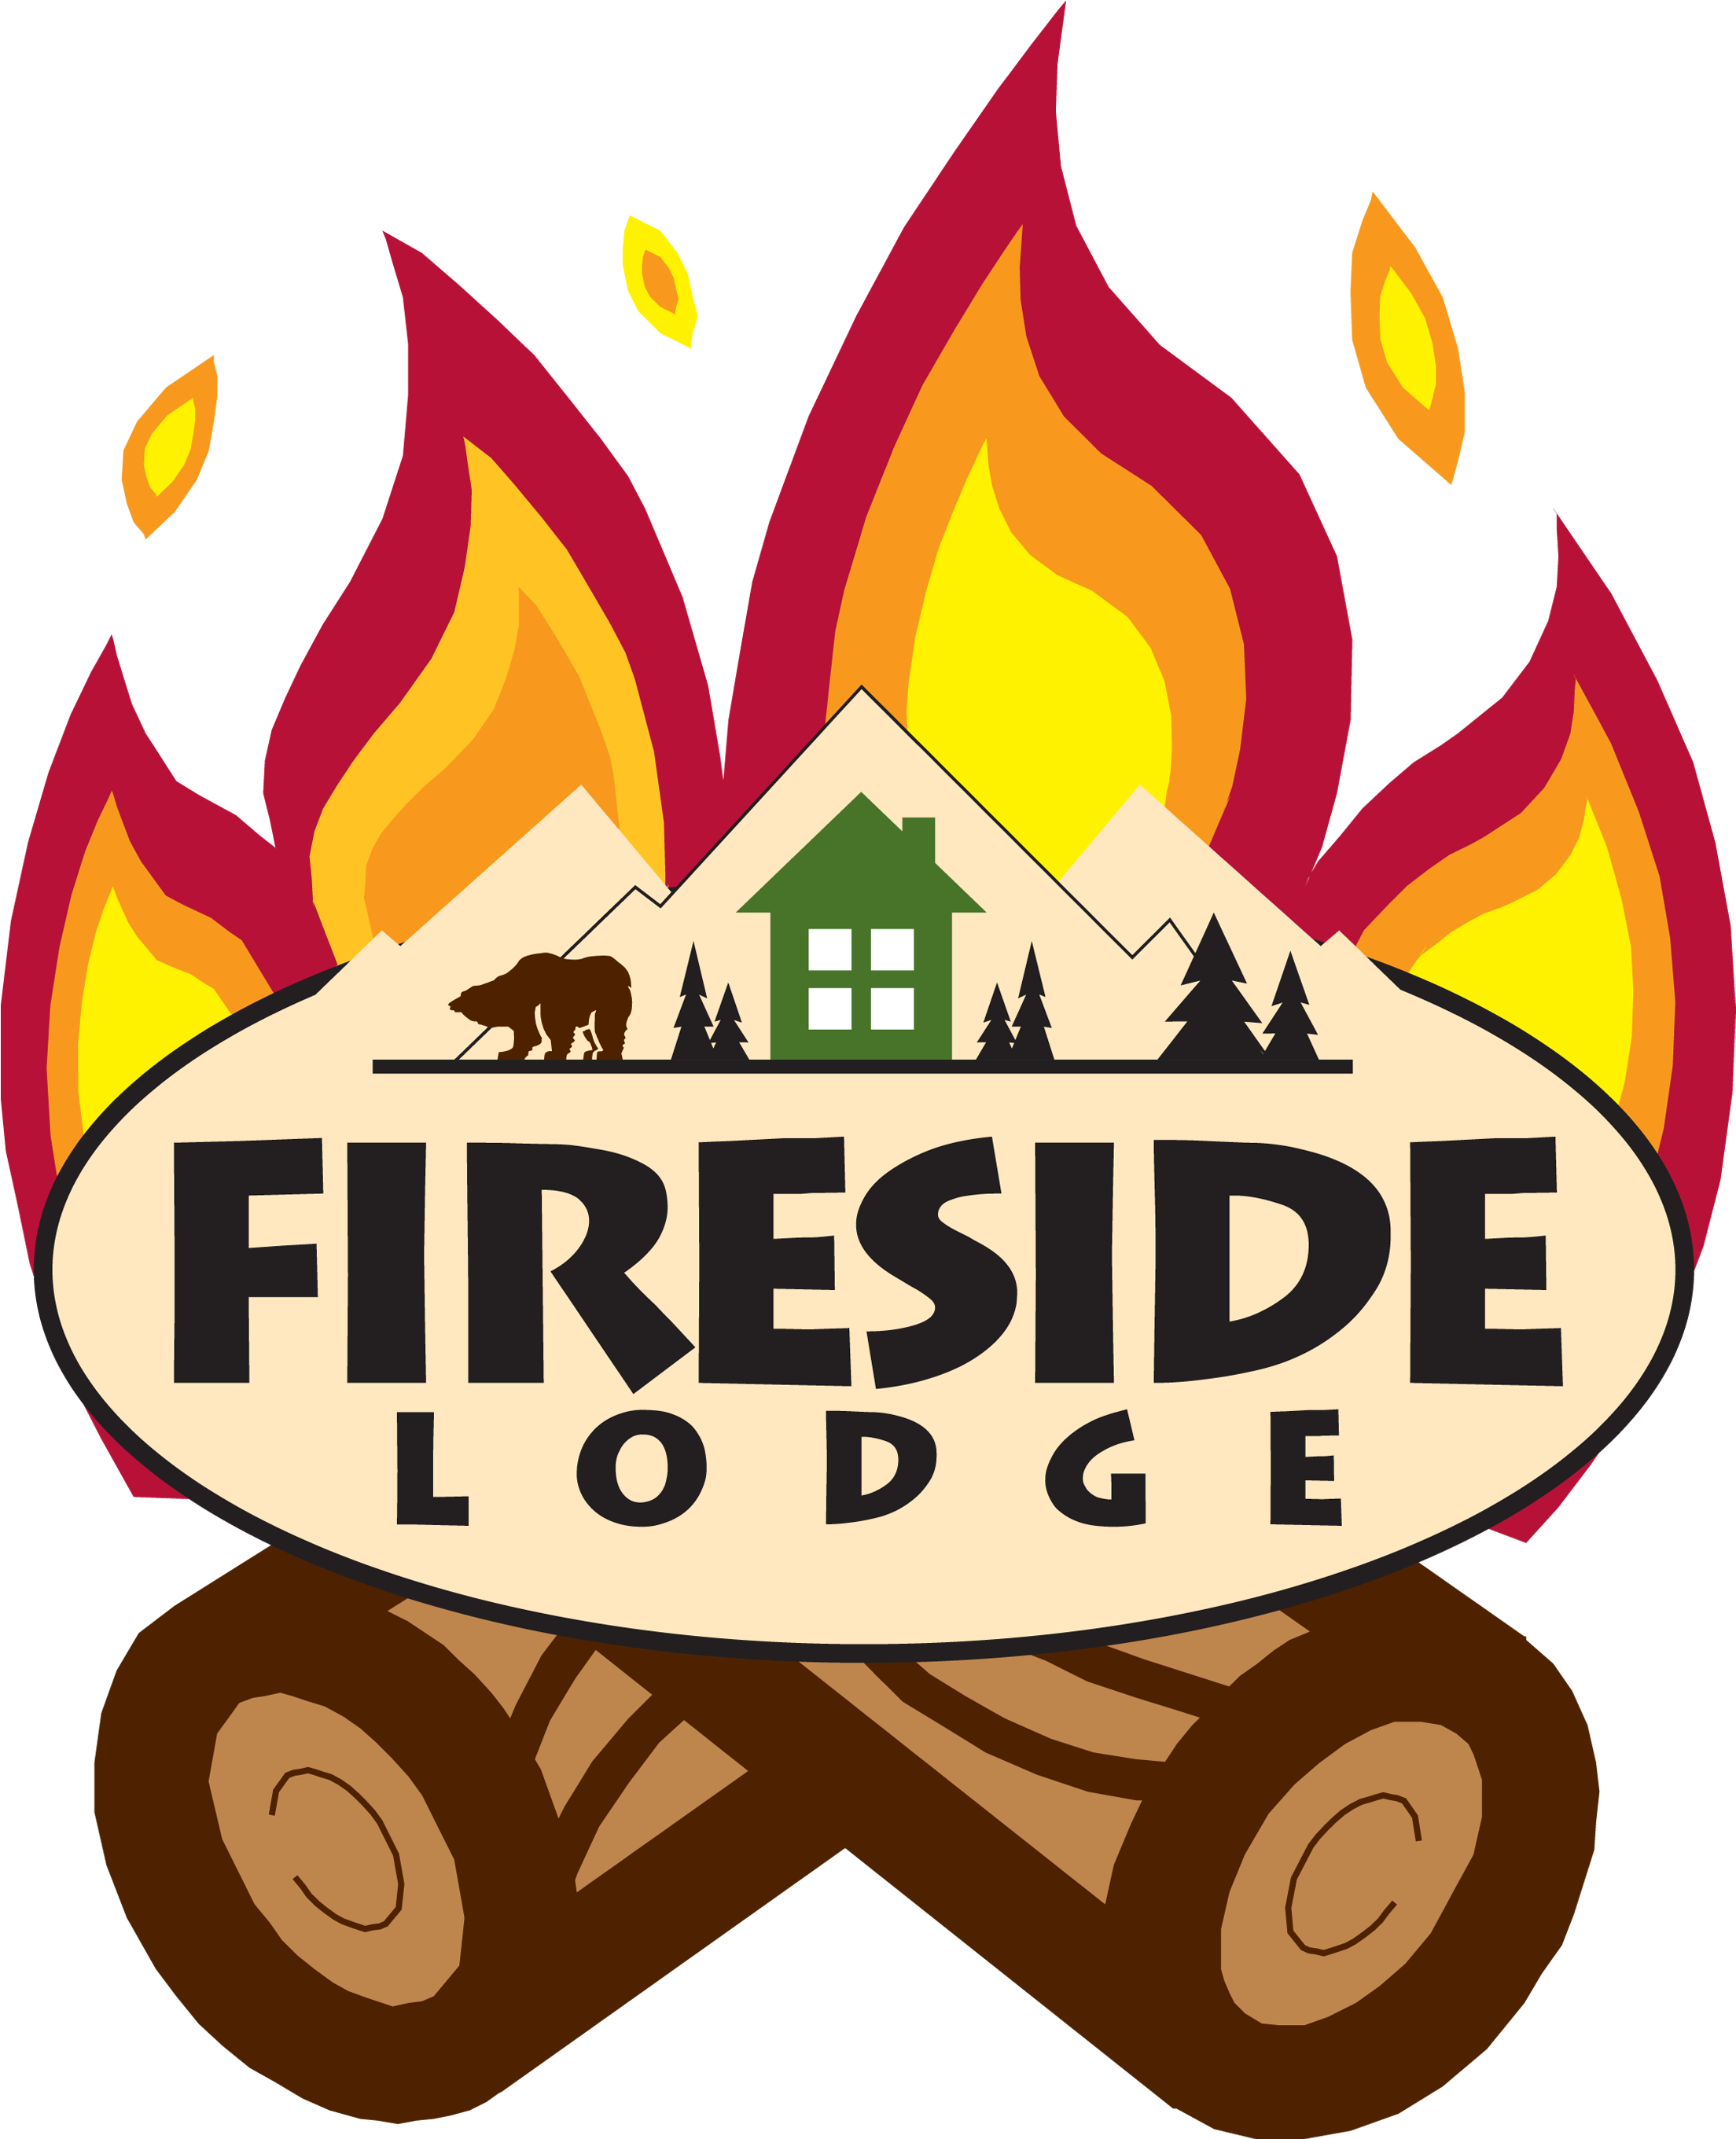 Fireside Lodge - Big Bear Lake (2251x2775)